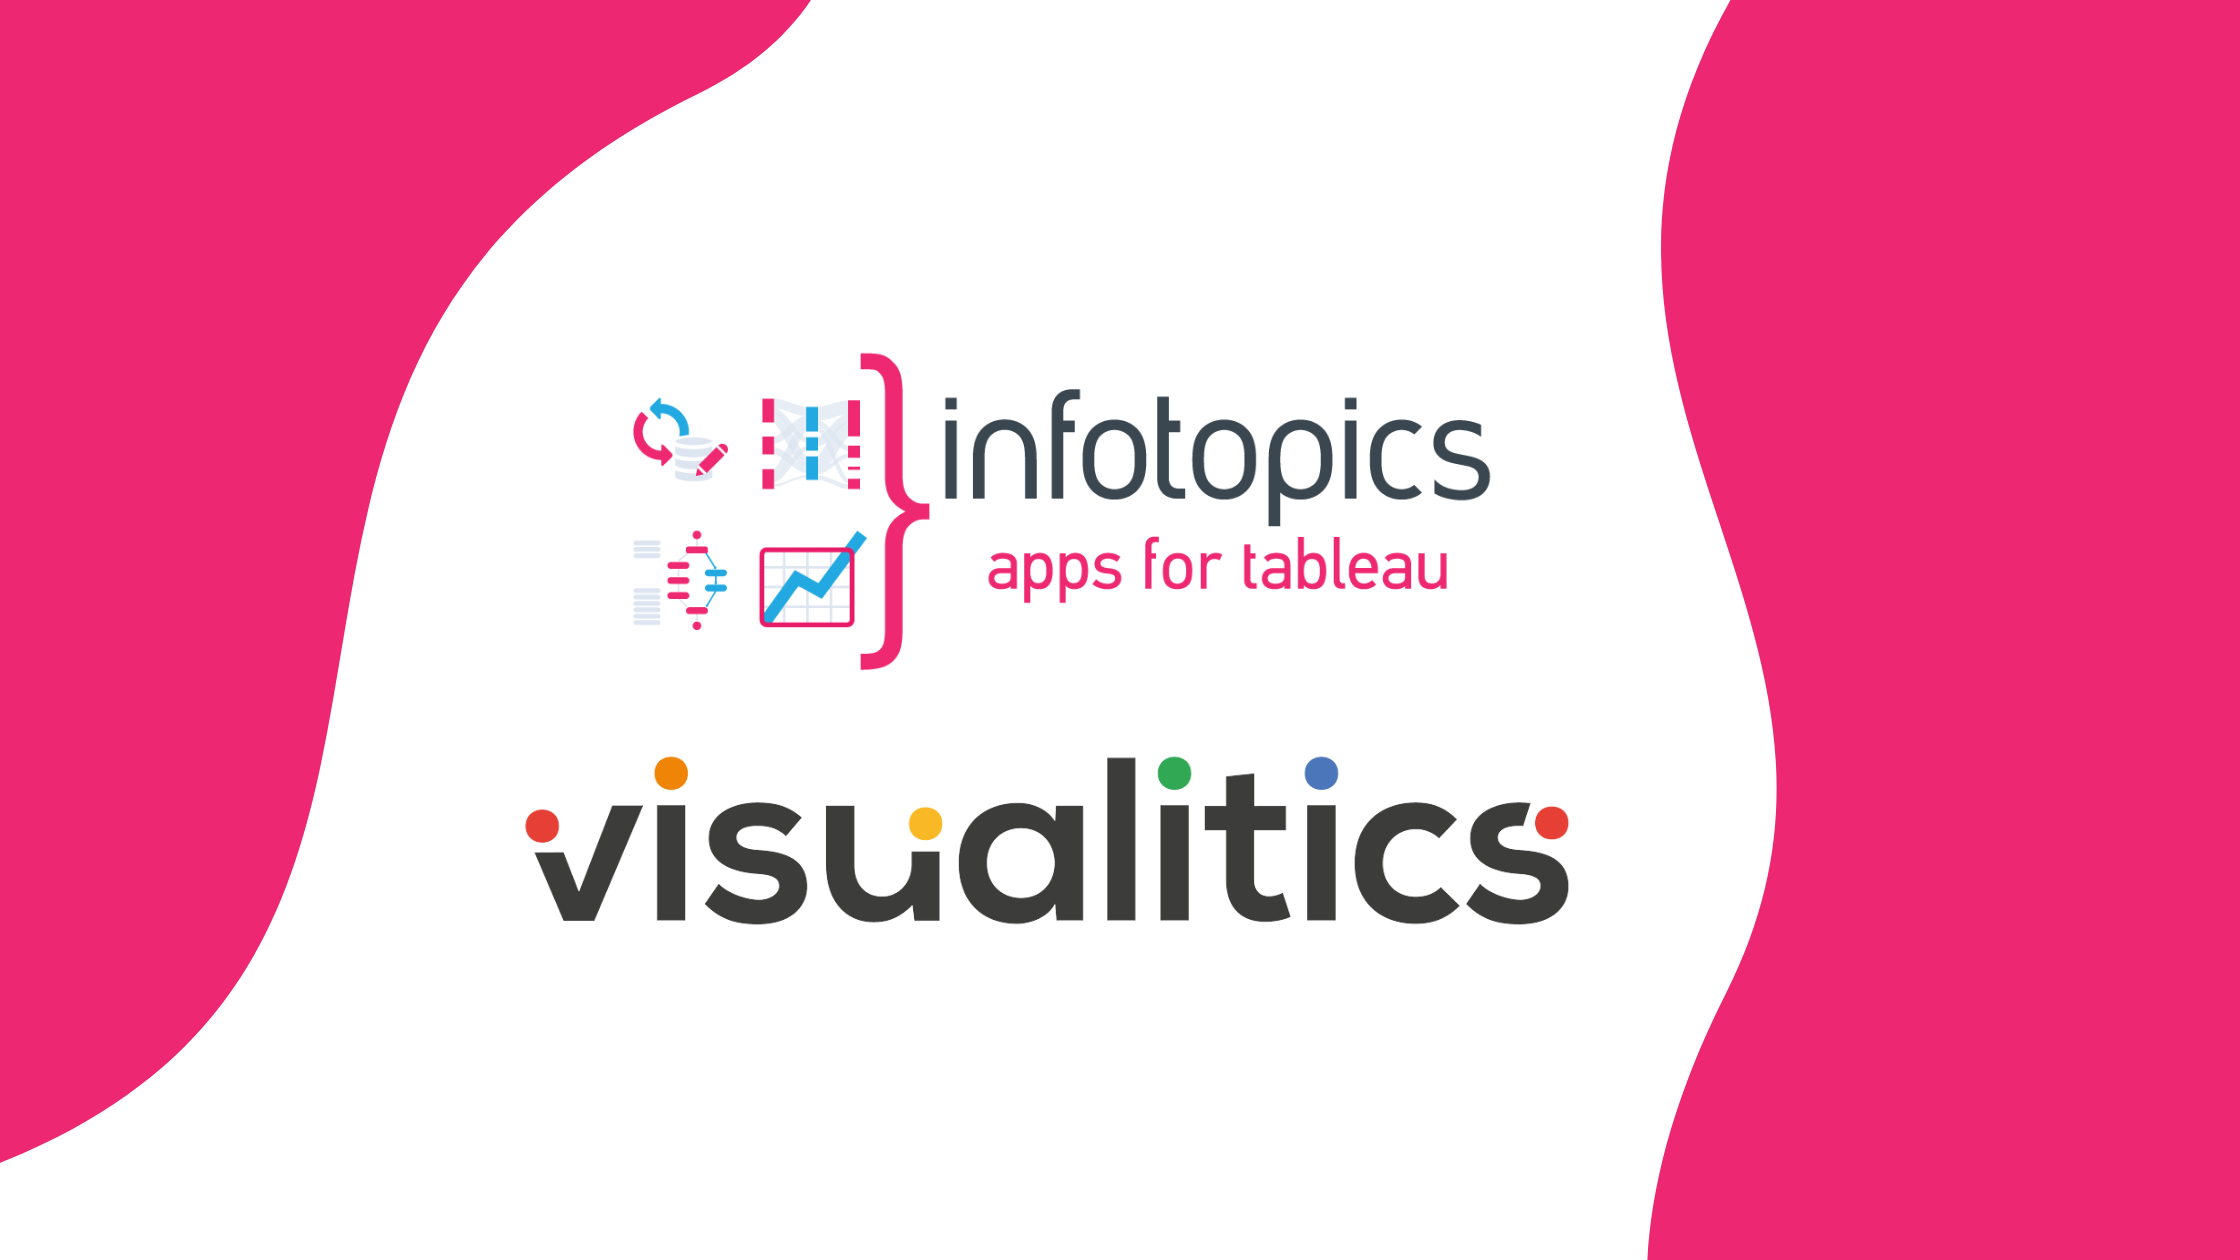 Visualitics partnership